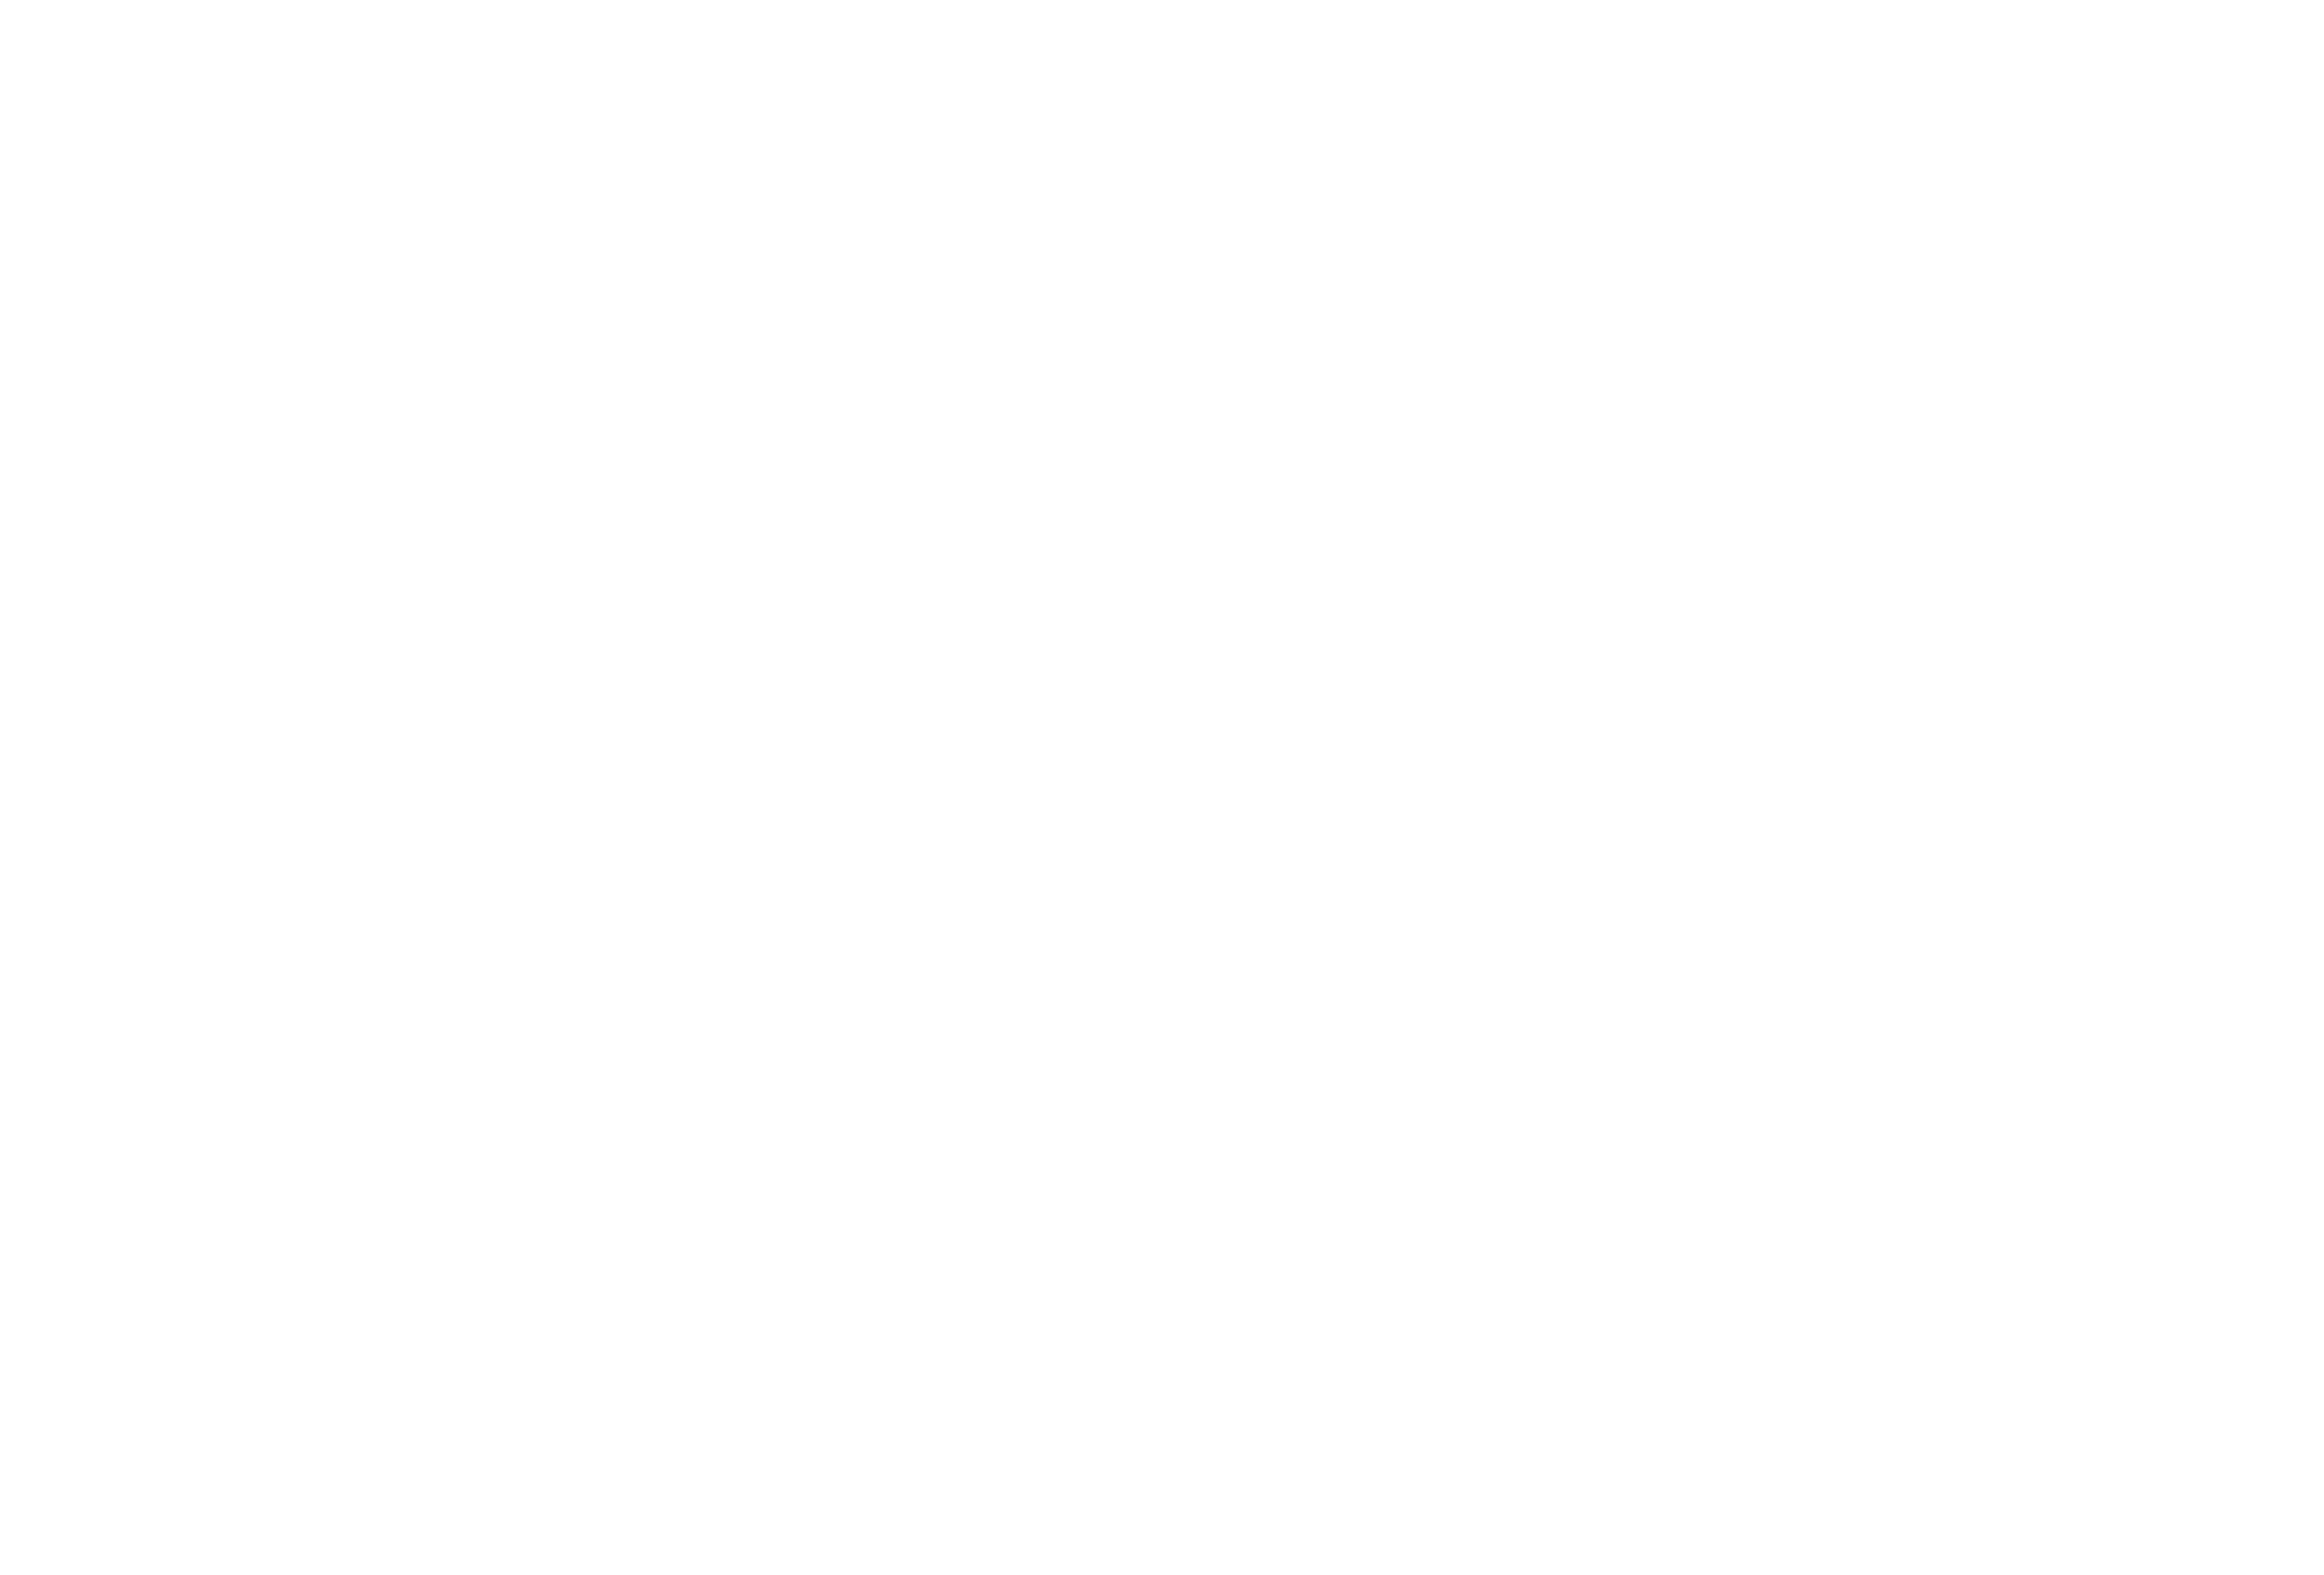    Grand Central